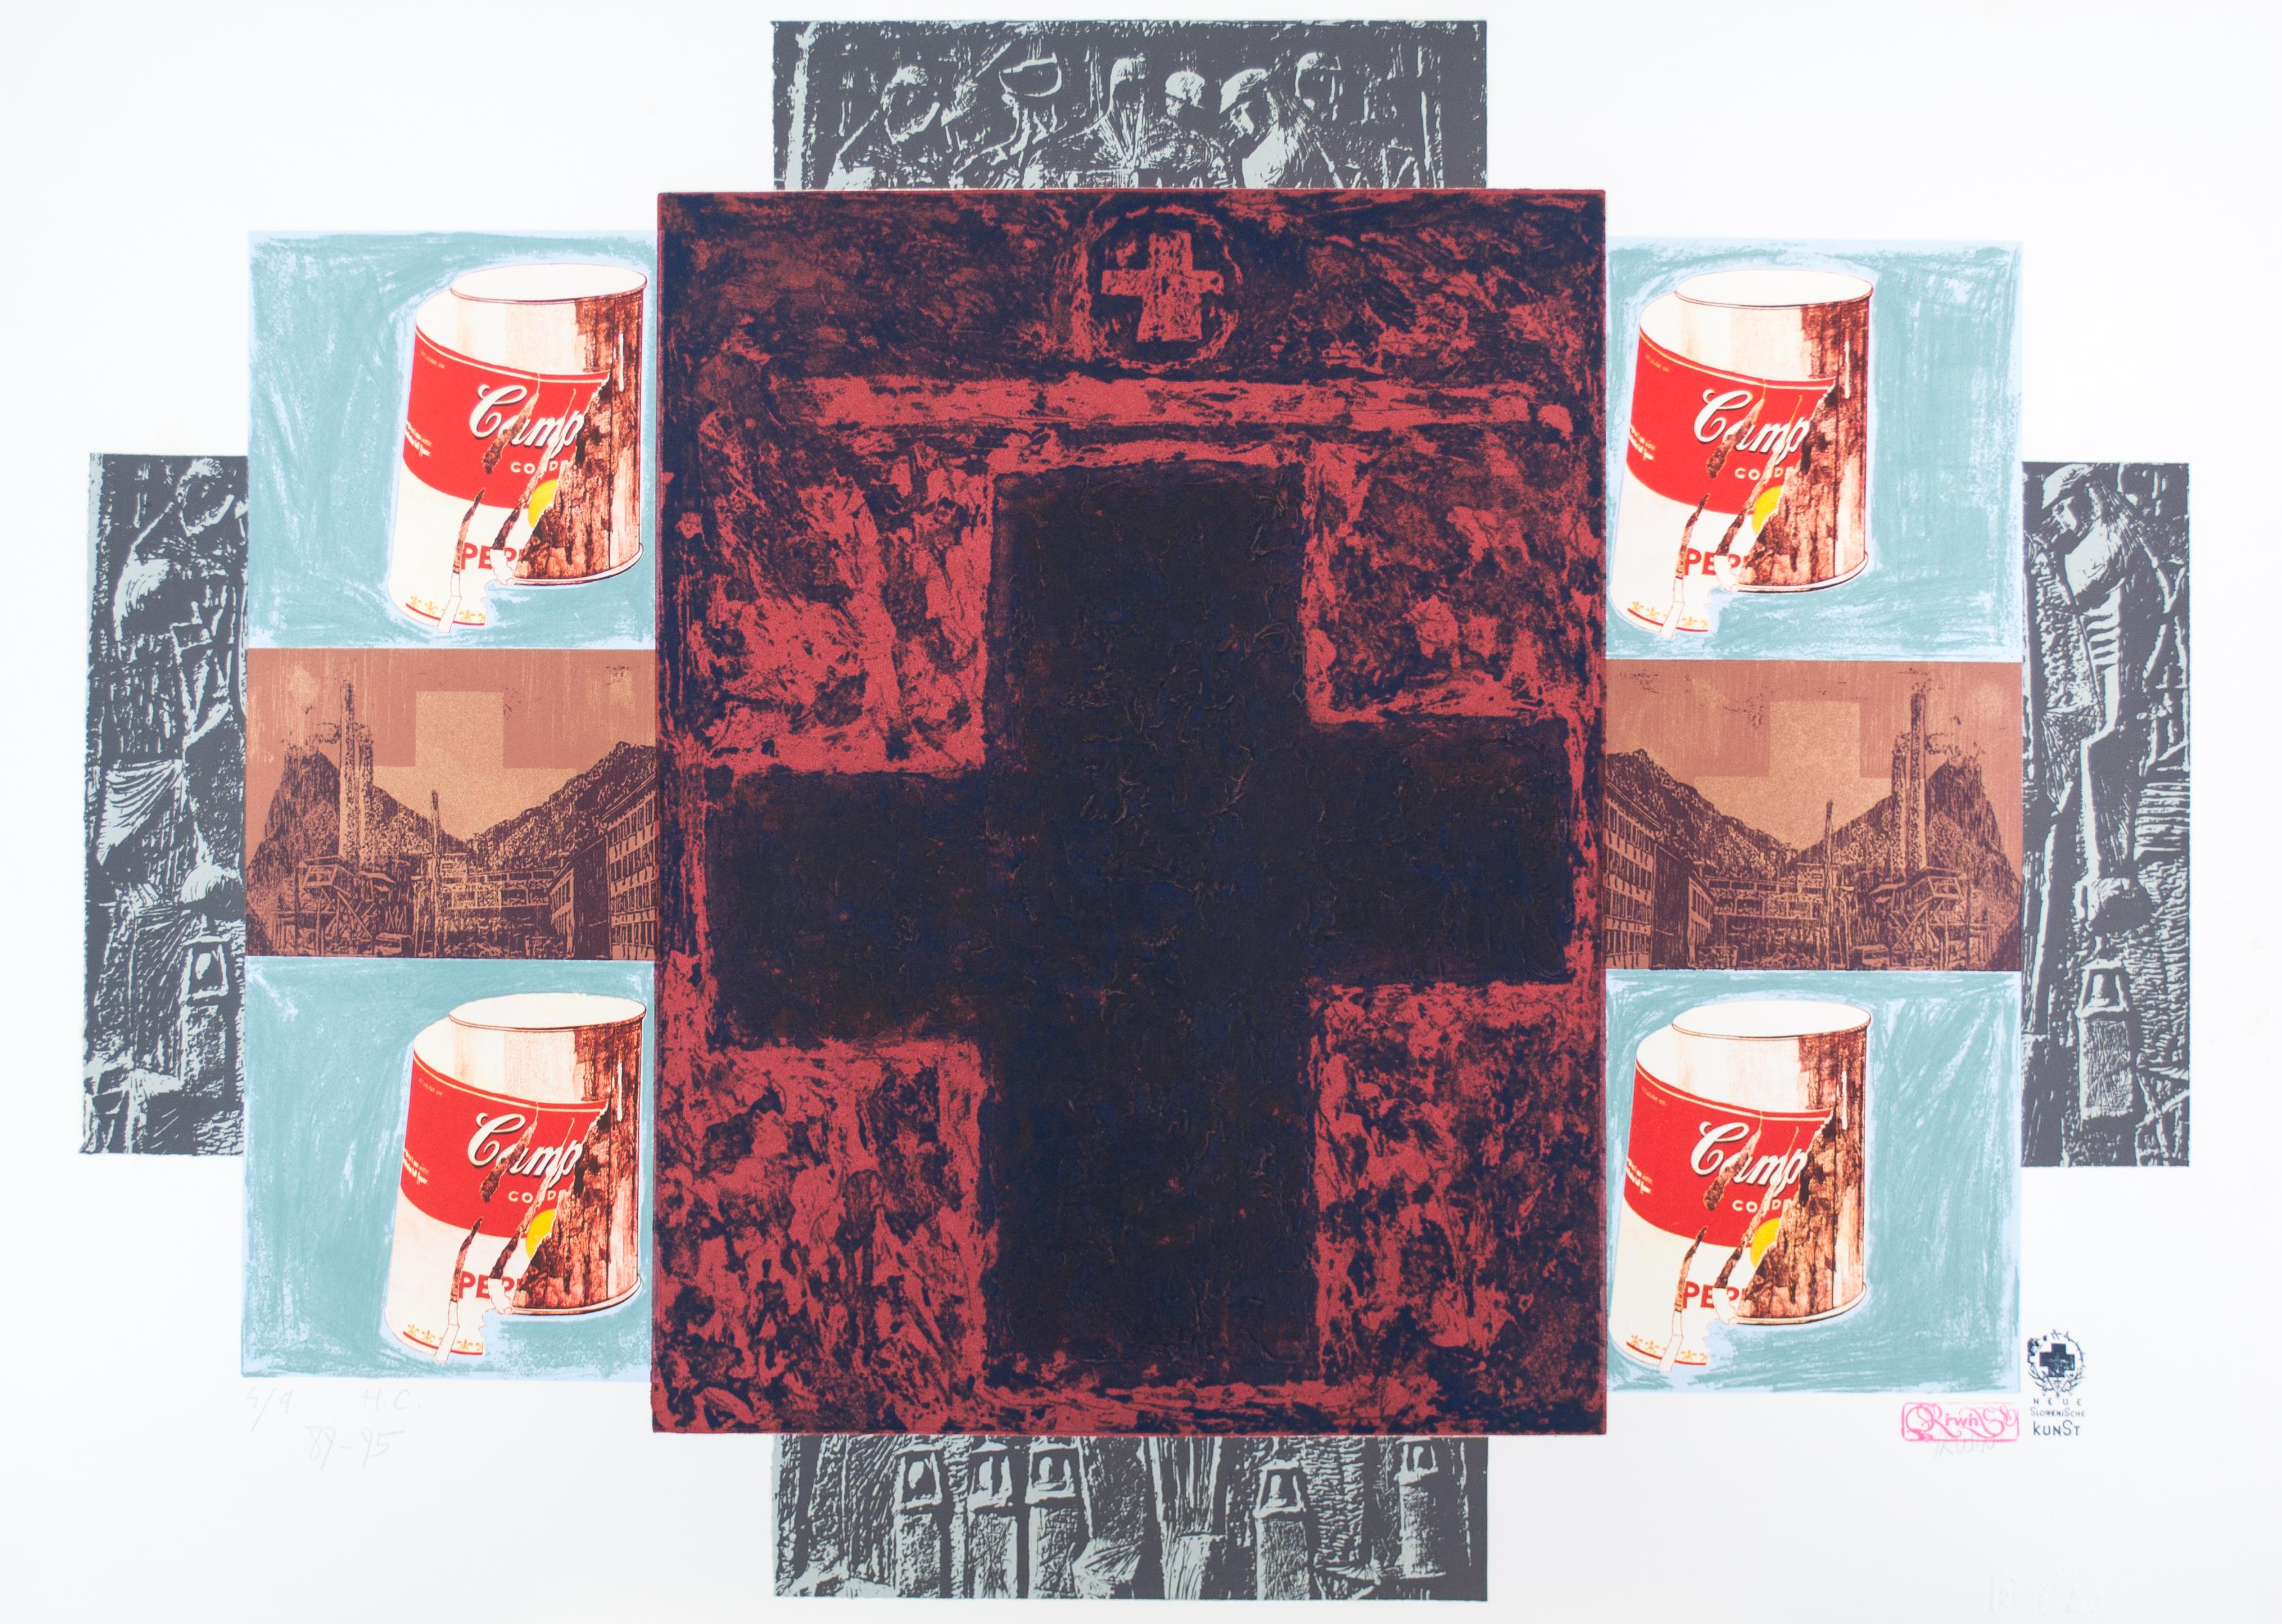 Toronto Portfolio “Hommage to Warhol” - Mixed Media Art by Irwin